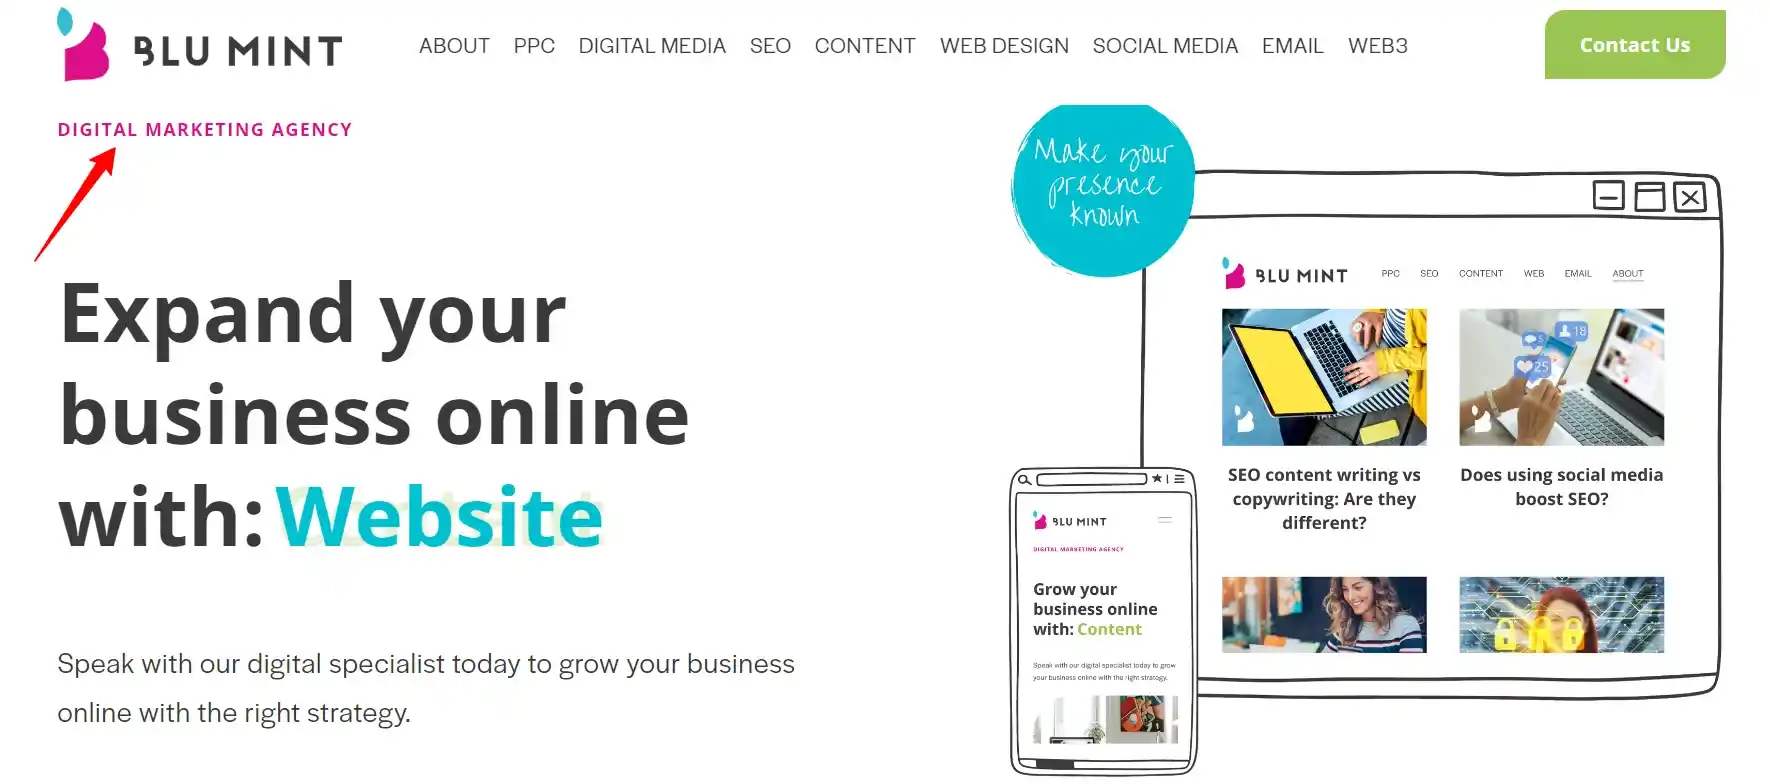 Blu Mint  digital marketing agencies for small businesses